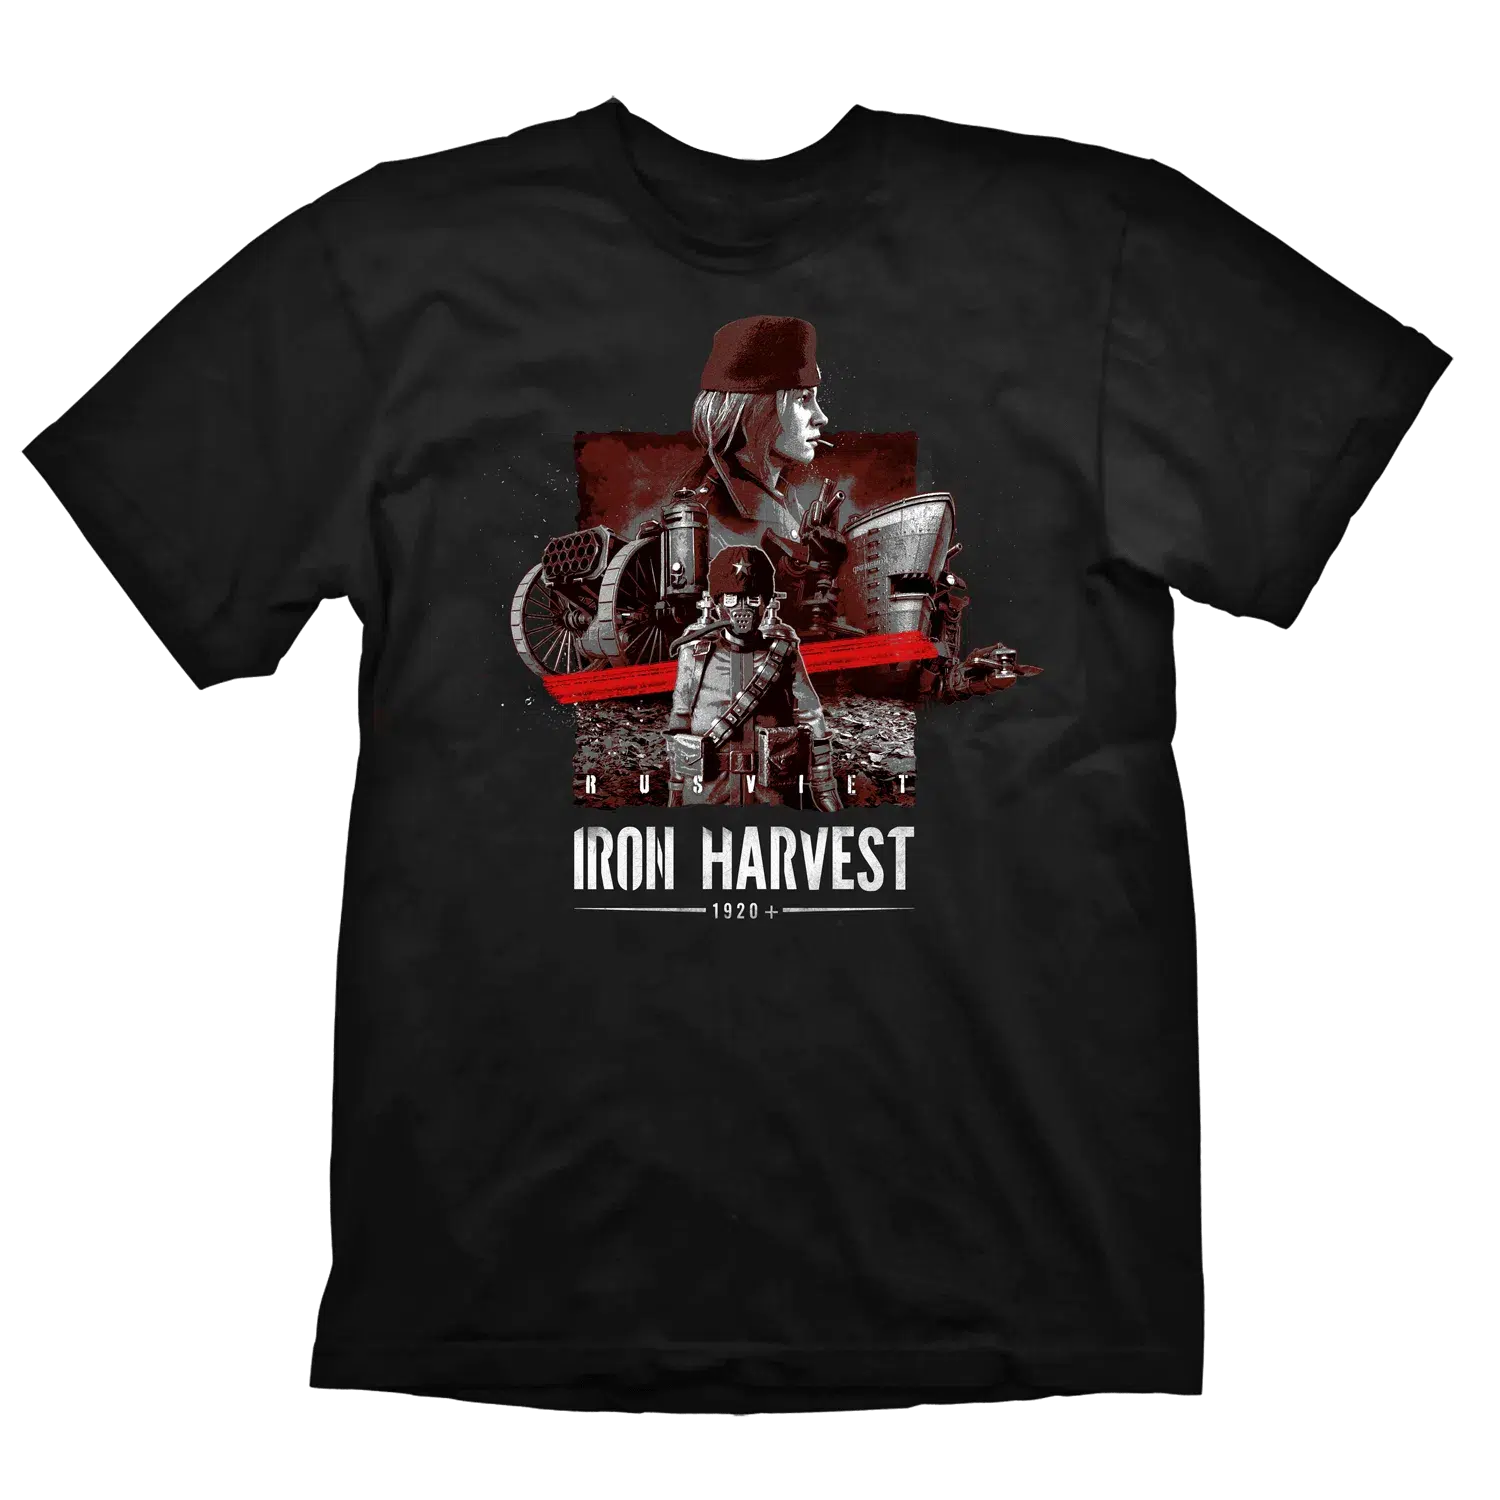 Iron Harvest T-Shirt "Rusviet" Black M